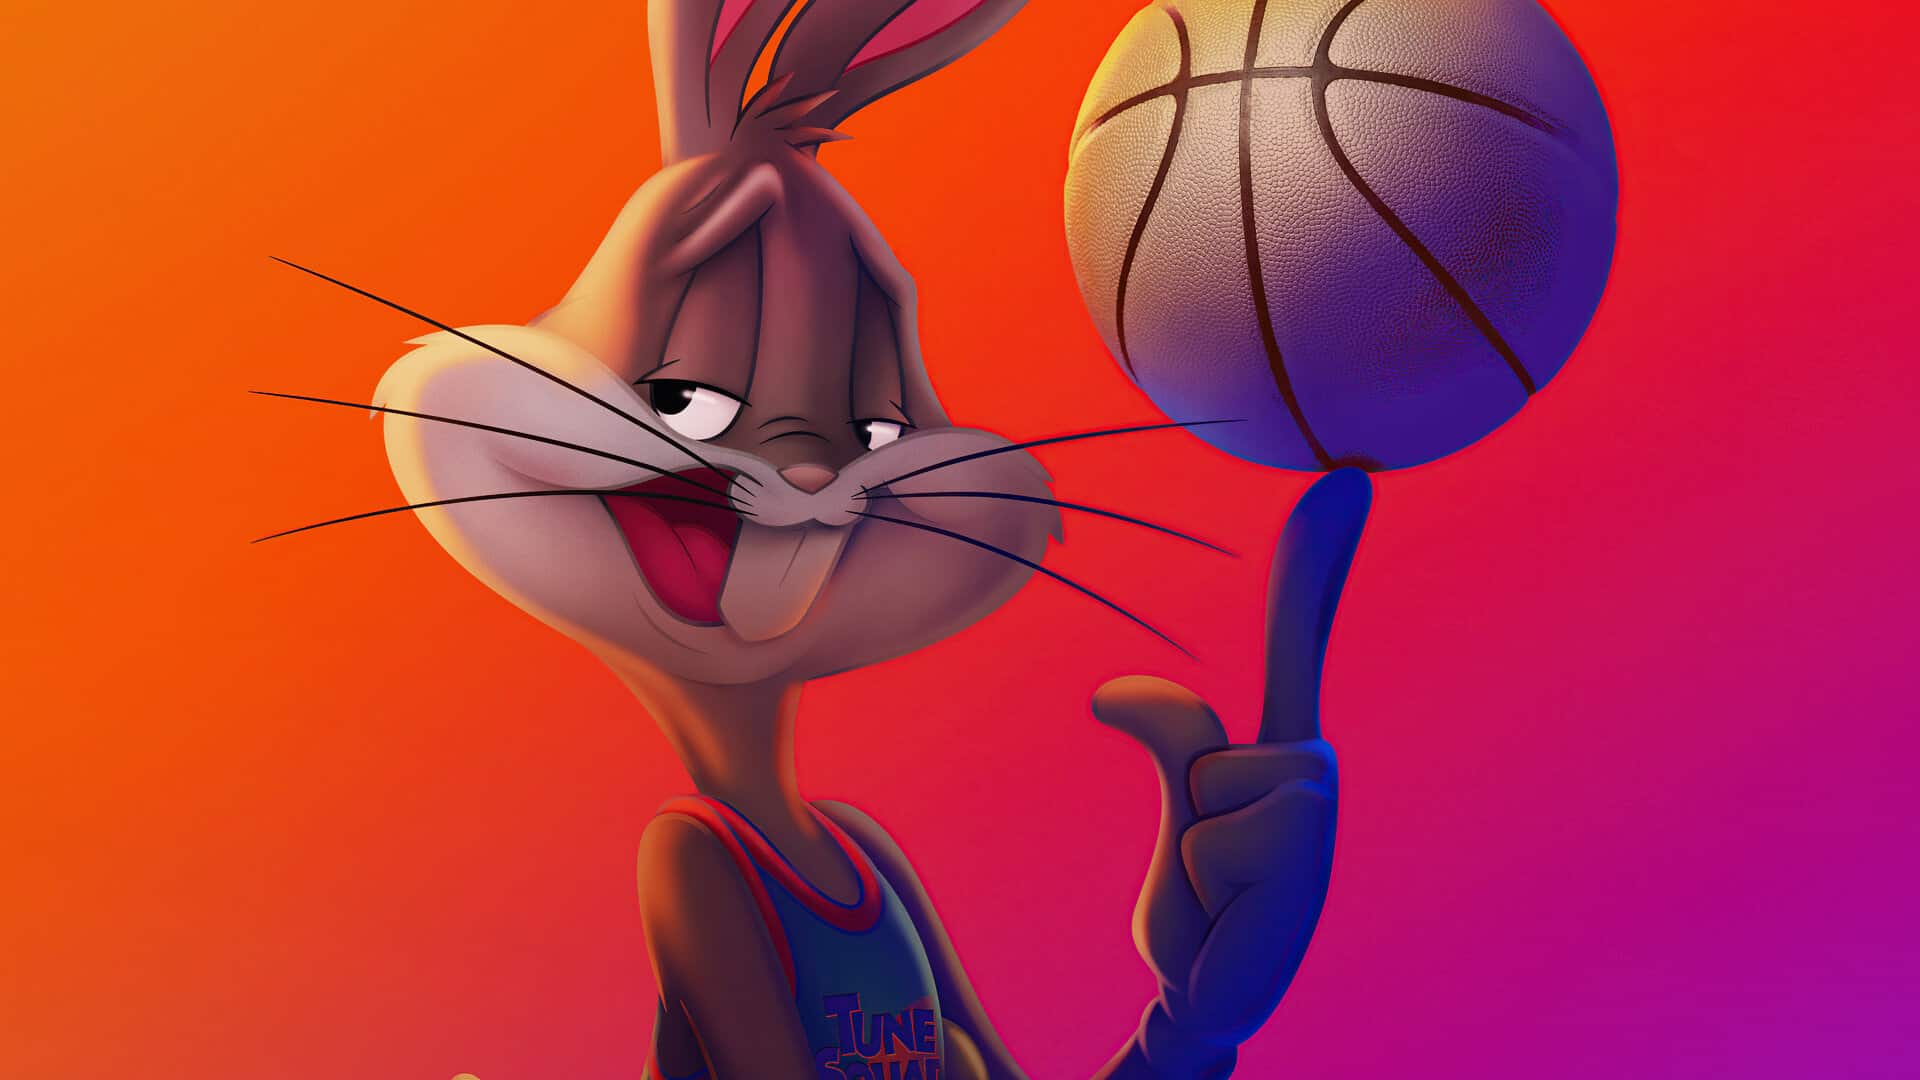 Bugs Bunny with a Basketball